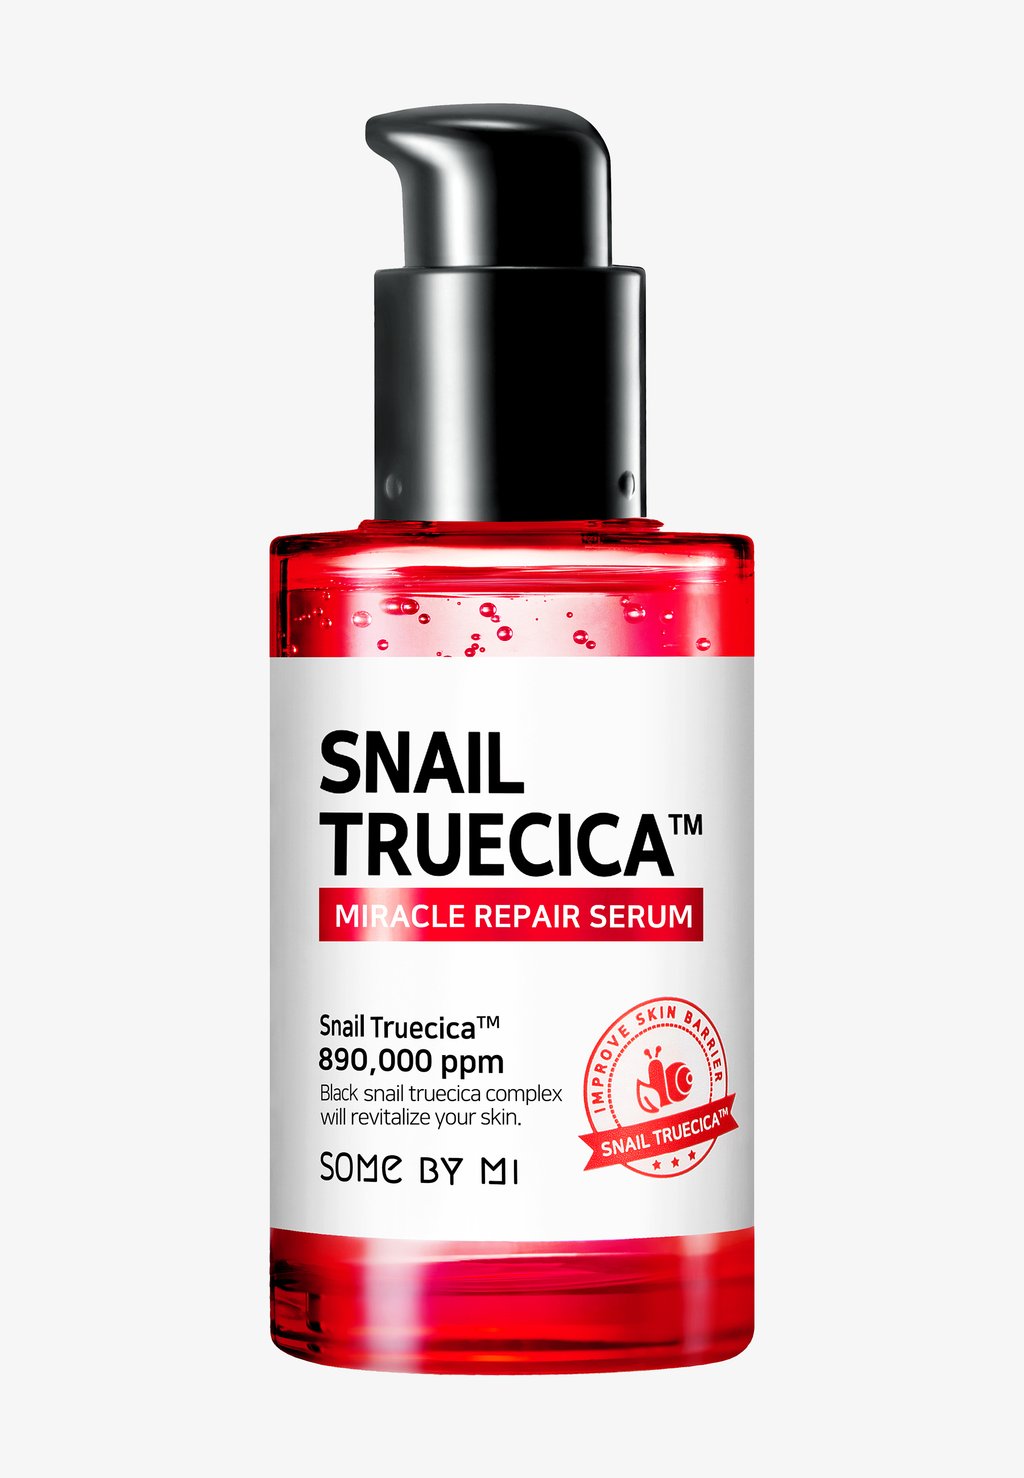 Сыворотка Snail Truecica Miracle Repair Serum SOME BY MI